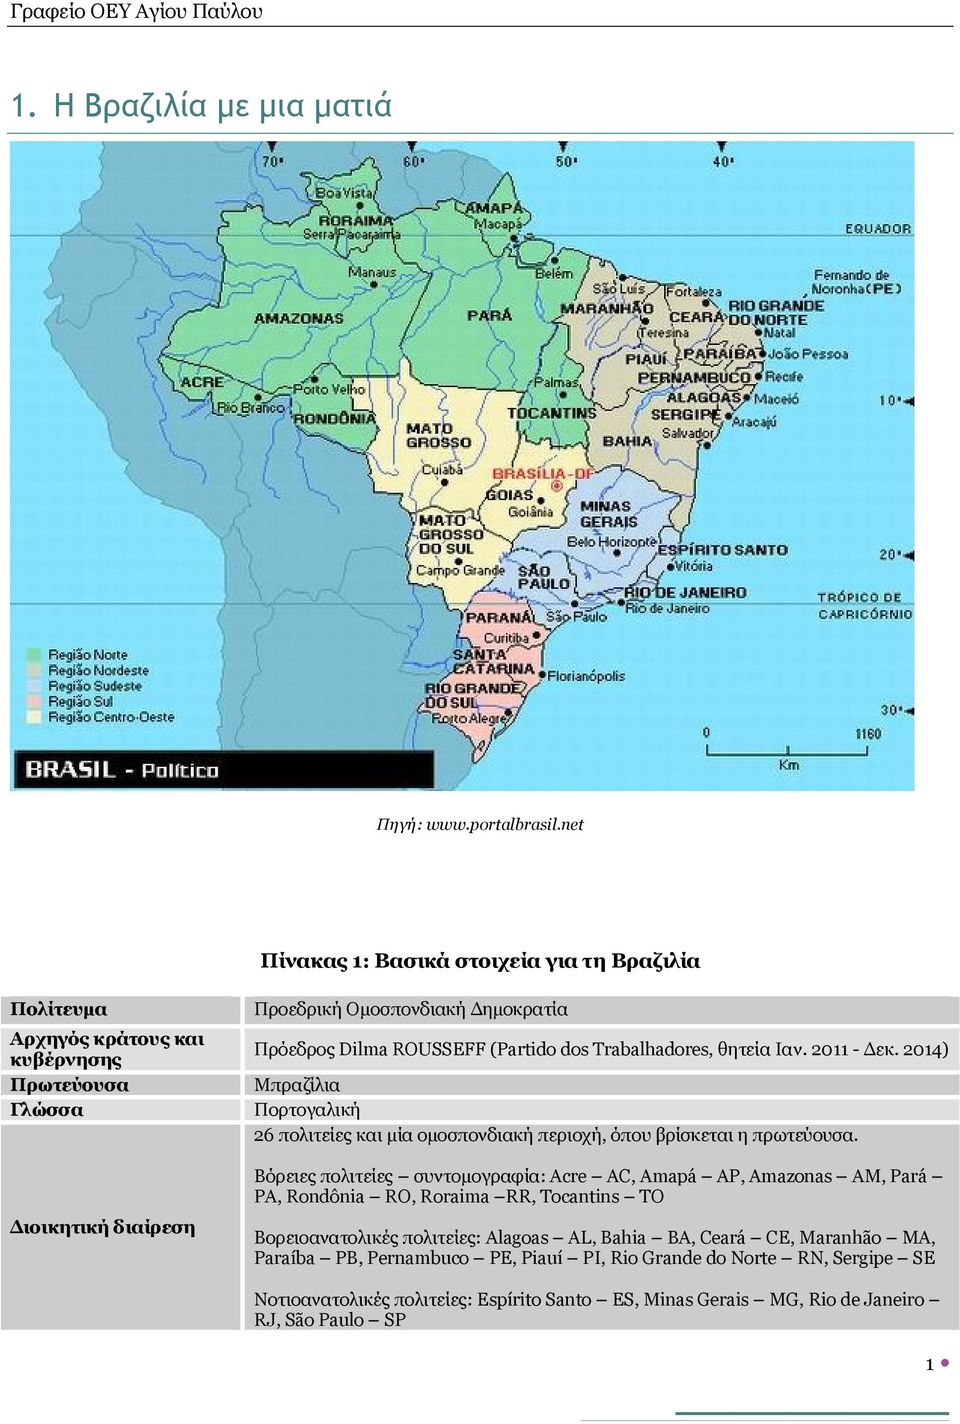 (Partido dos Trabalhadores, θητεία Ιαν. 2011 - Δεκ. 2014) Μπραζίλια Πορτογαλική 26 πολιτείες και μία ομοσπονδιακή περιοχή, όπου βρίσκεται η πρωτεύουσα.